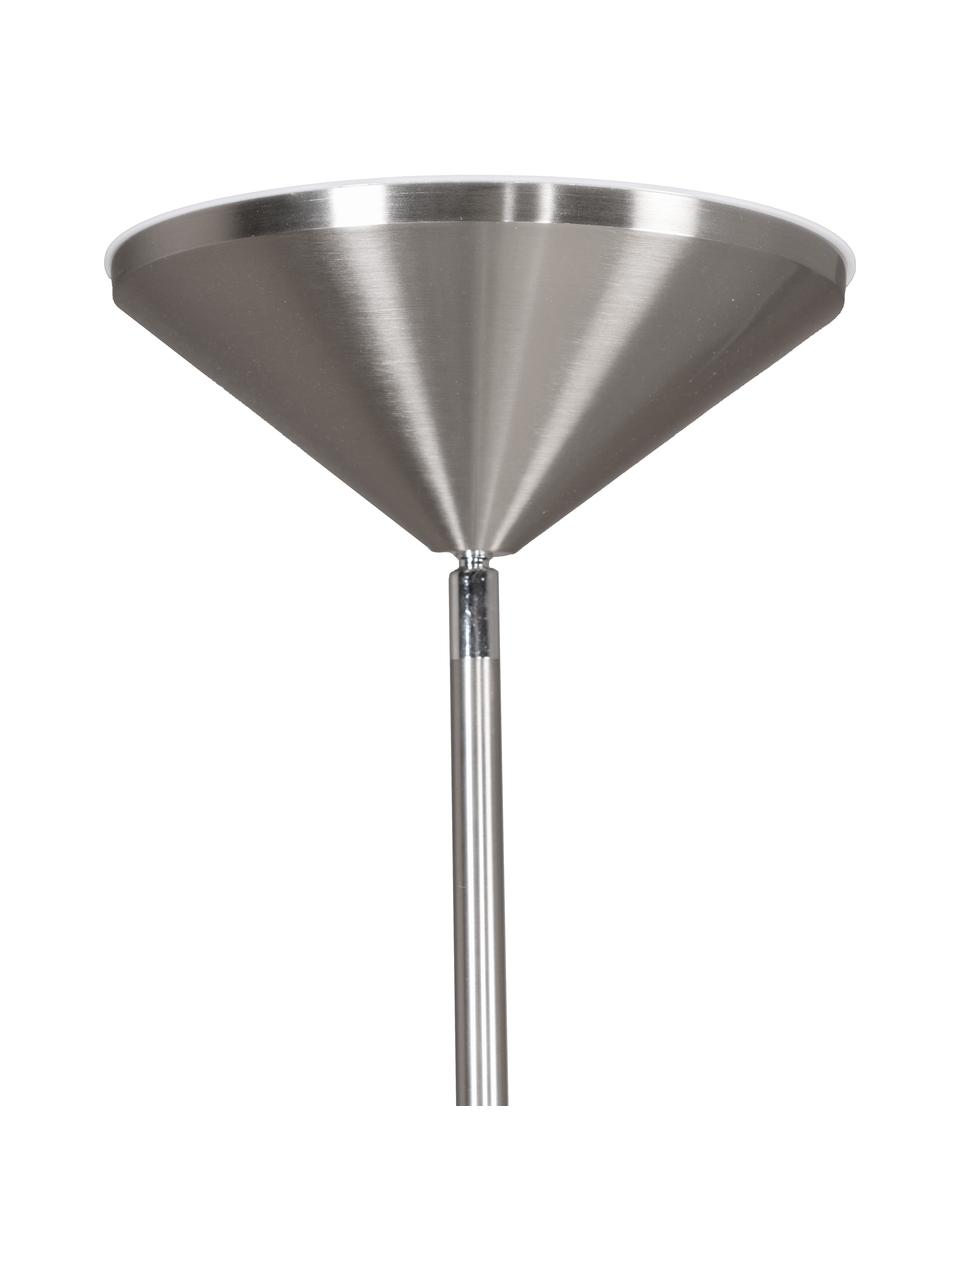 Grote uplighter Corong, Lamp: verchroomd staal, Chroomkleurig, Ø 28 x H 180 cm